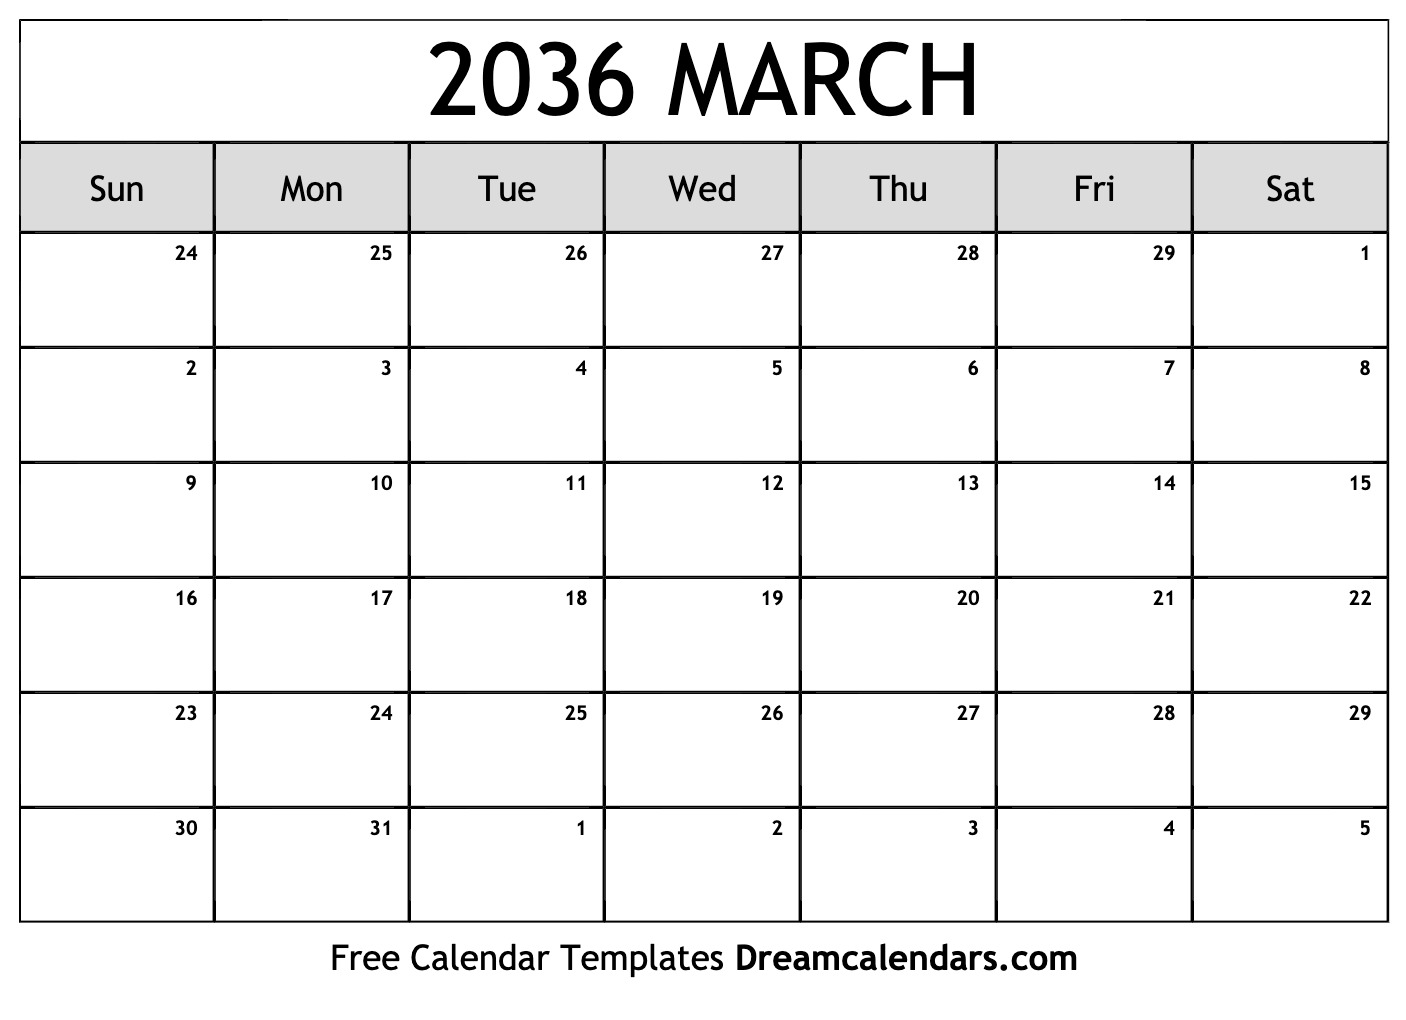 March 2036 Calendar Free Blank Printable Templates